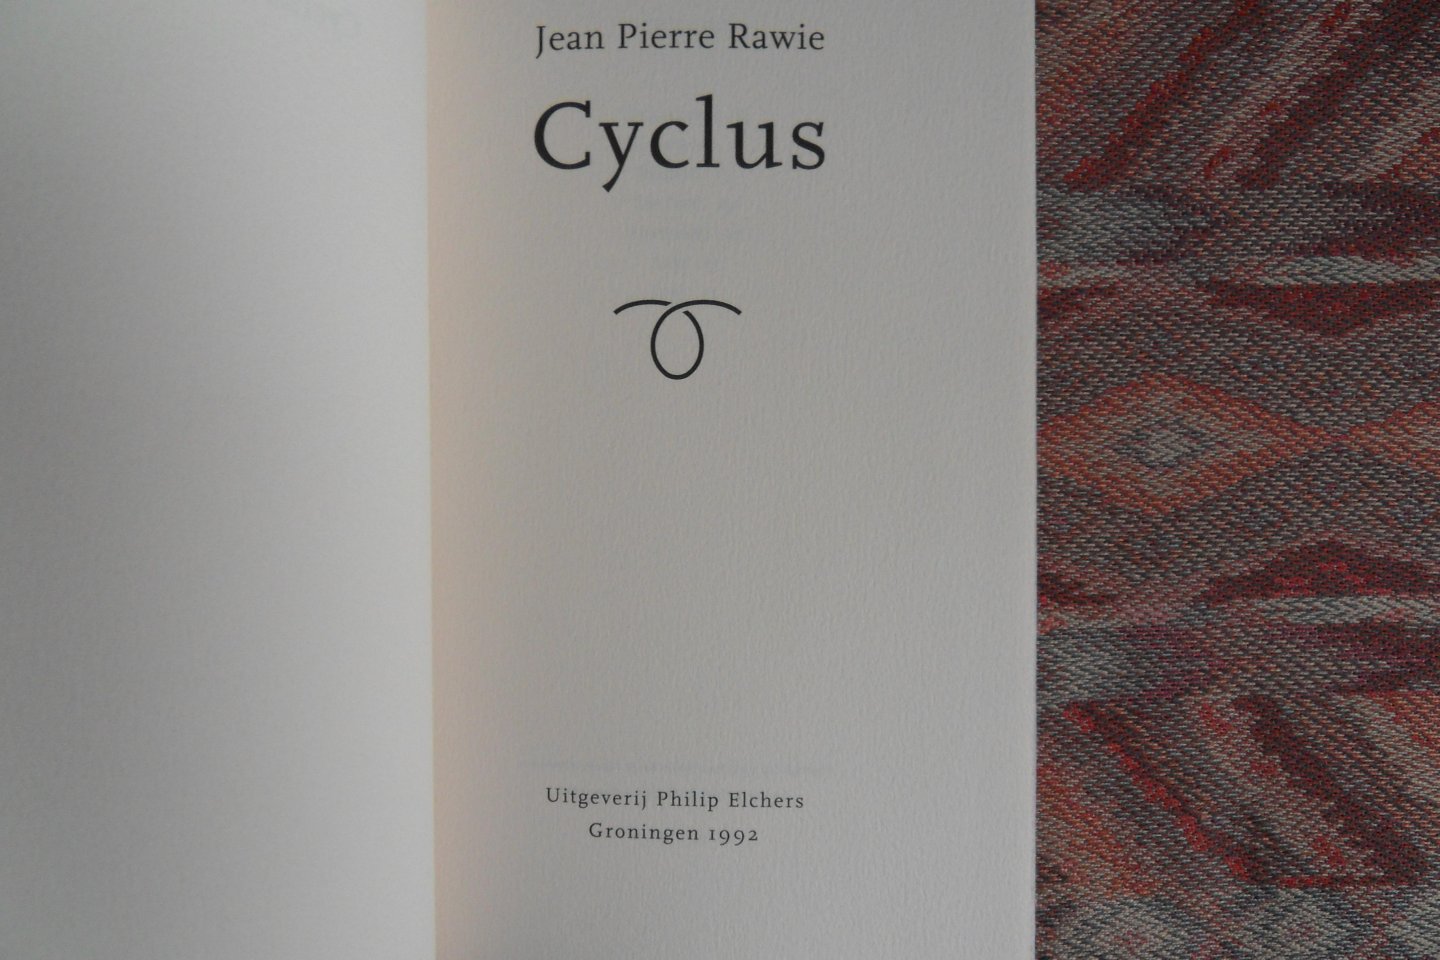 Rawie, Jean Pierre. - Cyclus. [ Genummerd ex. 203 / 250 ].